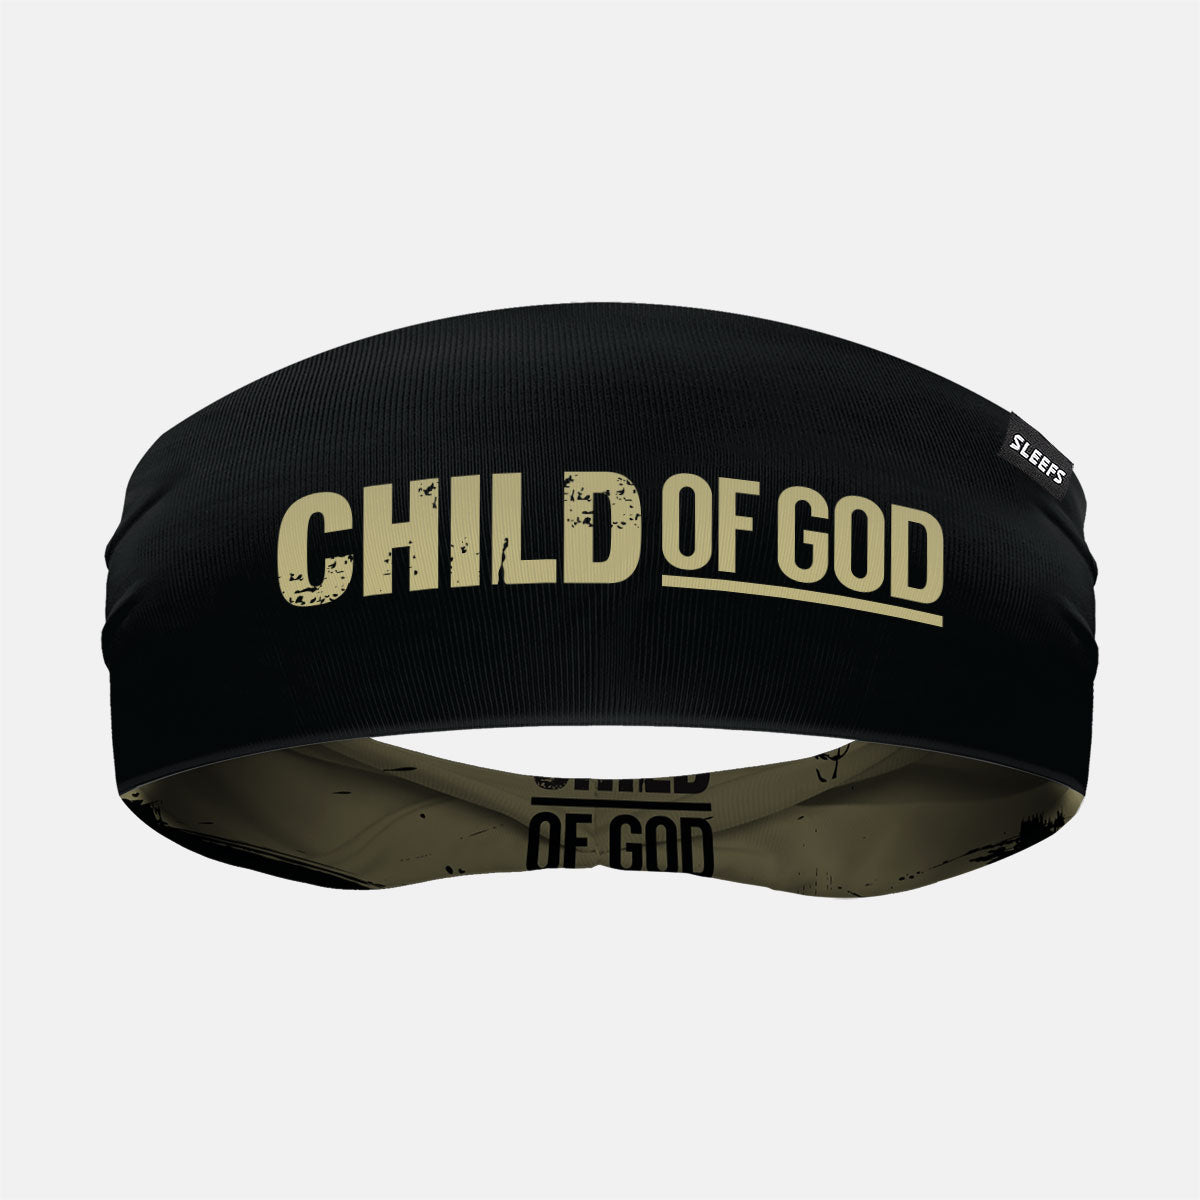 Demario Davis' Child Of God Headband